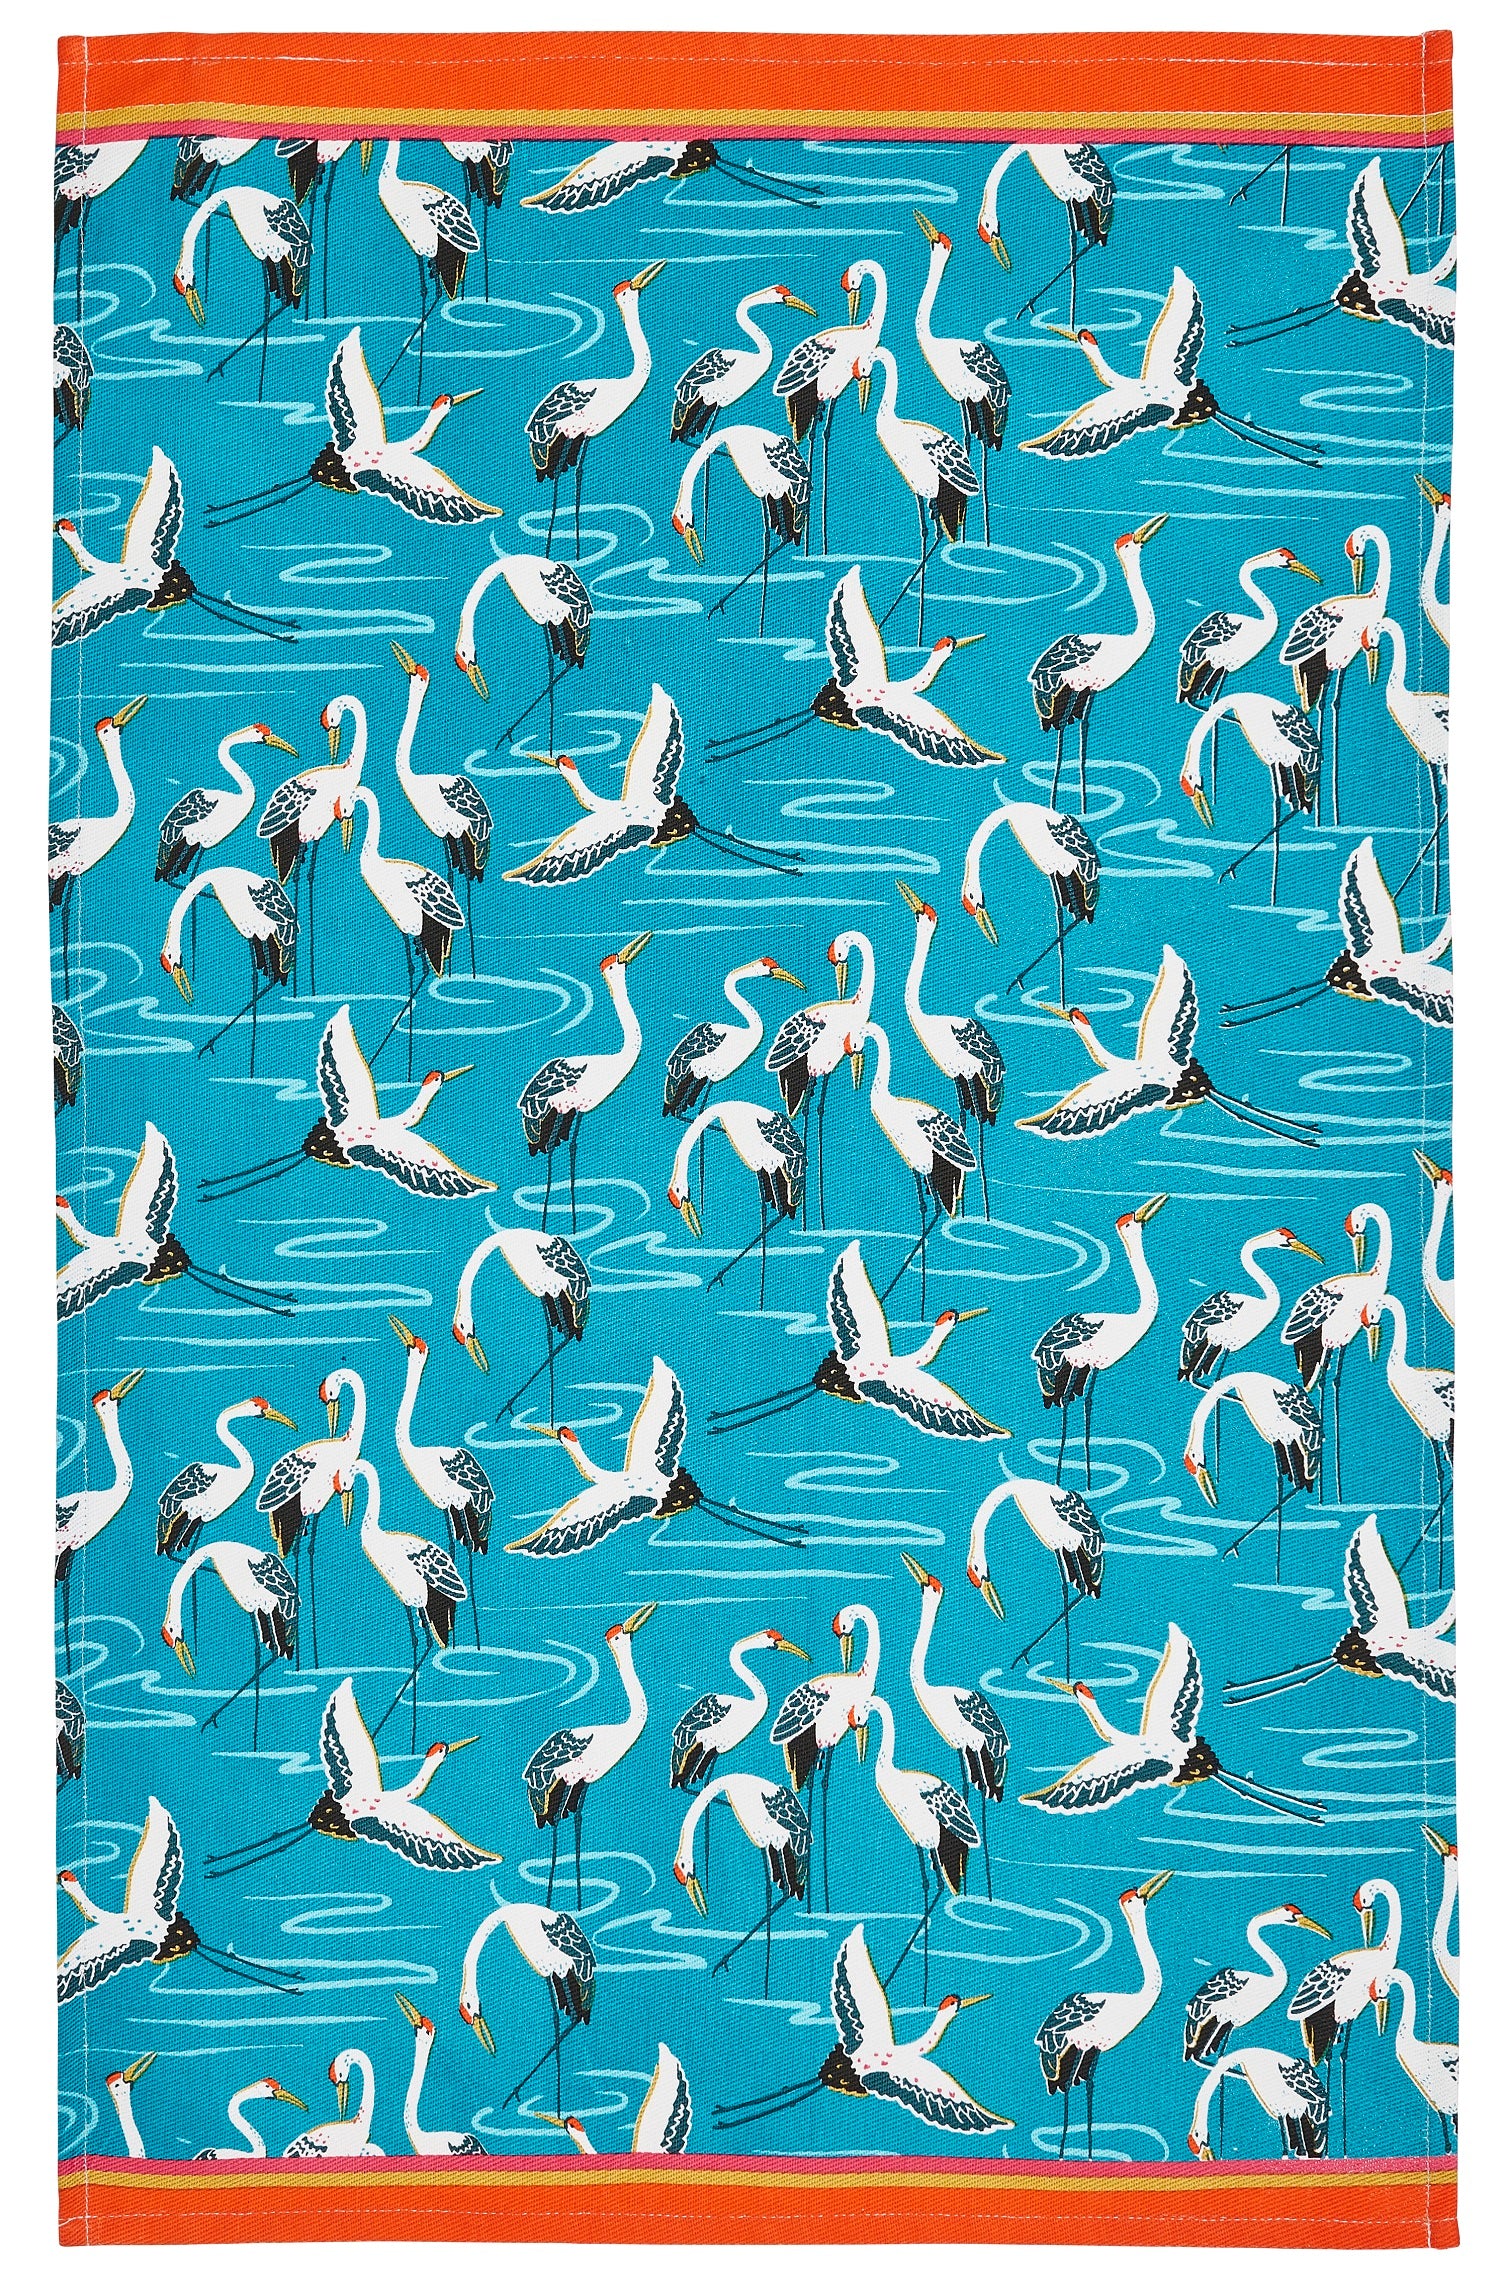 Ulster Weavers, "Cranes", Pure cotton printed tea towel. - Home Landing